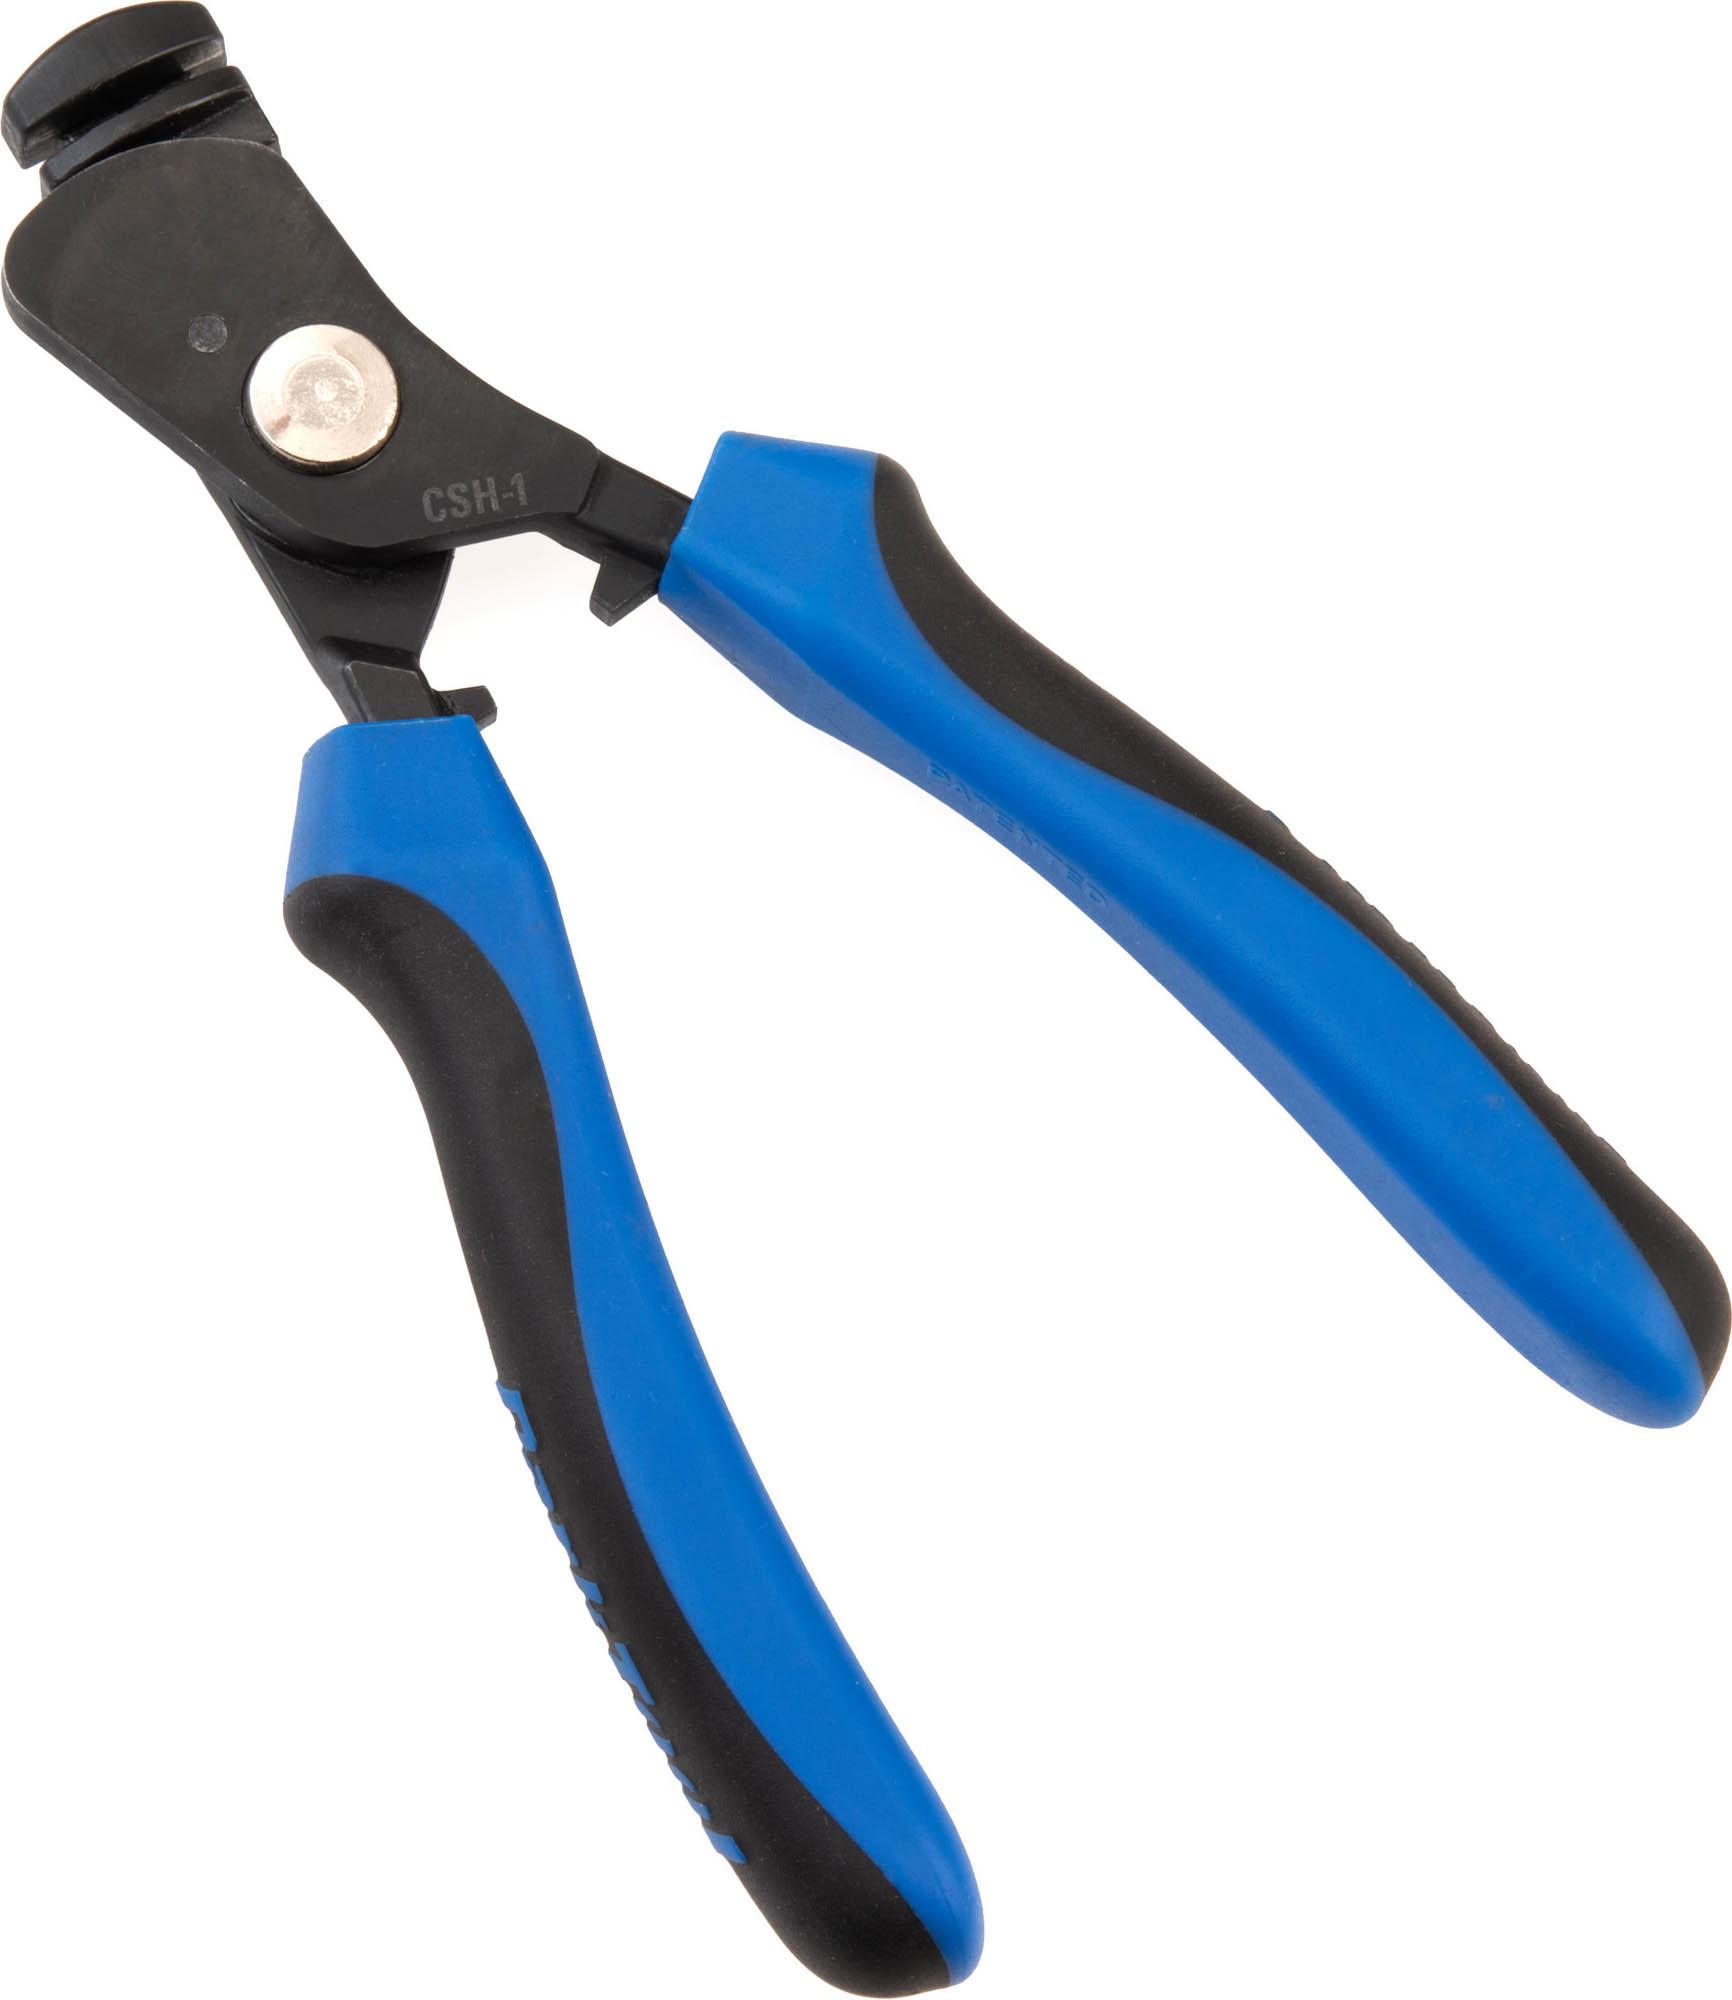 Park Tool Clamping Spoke Holder Csh-1  Blue/black